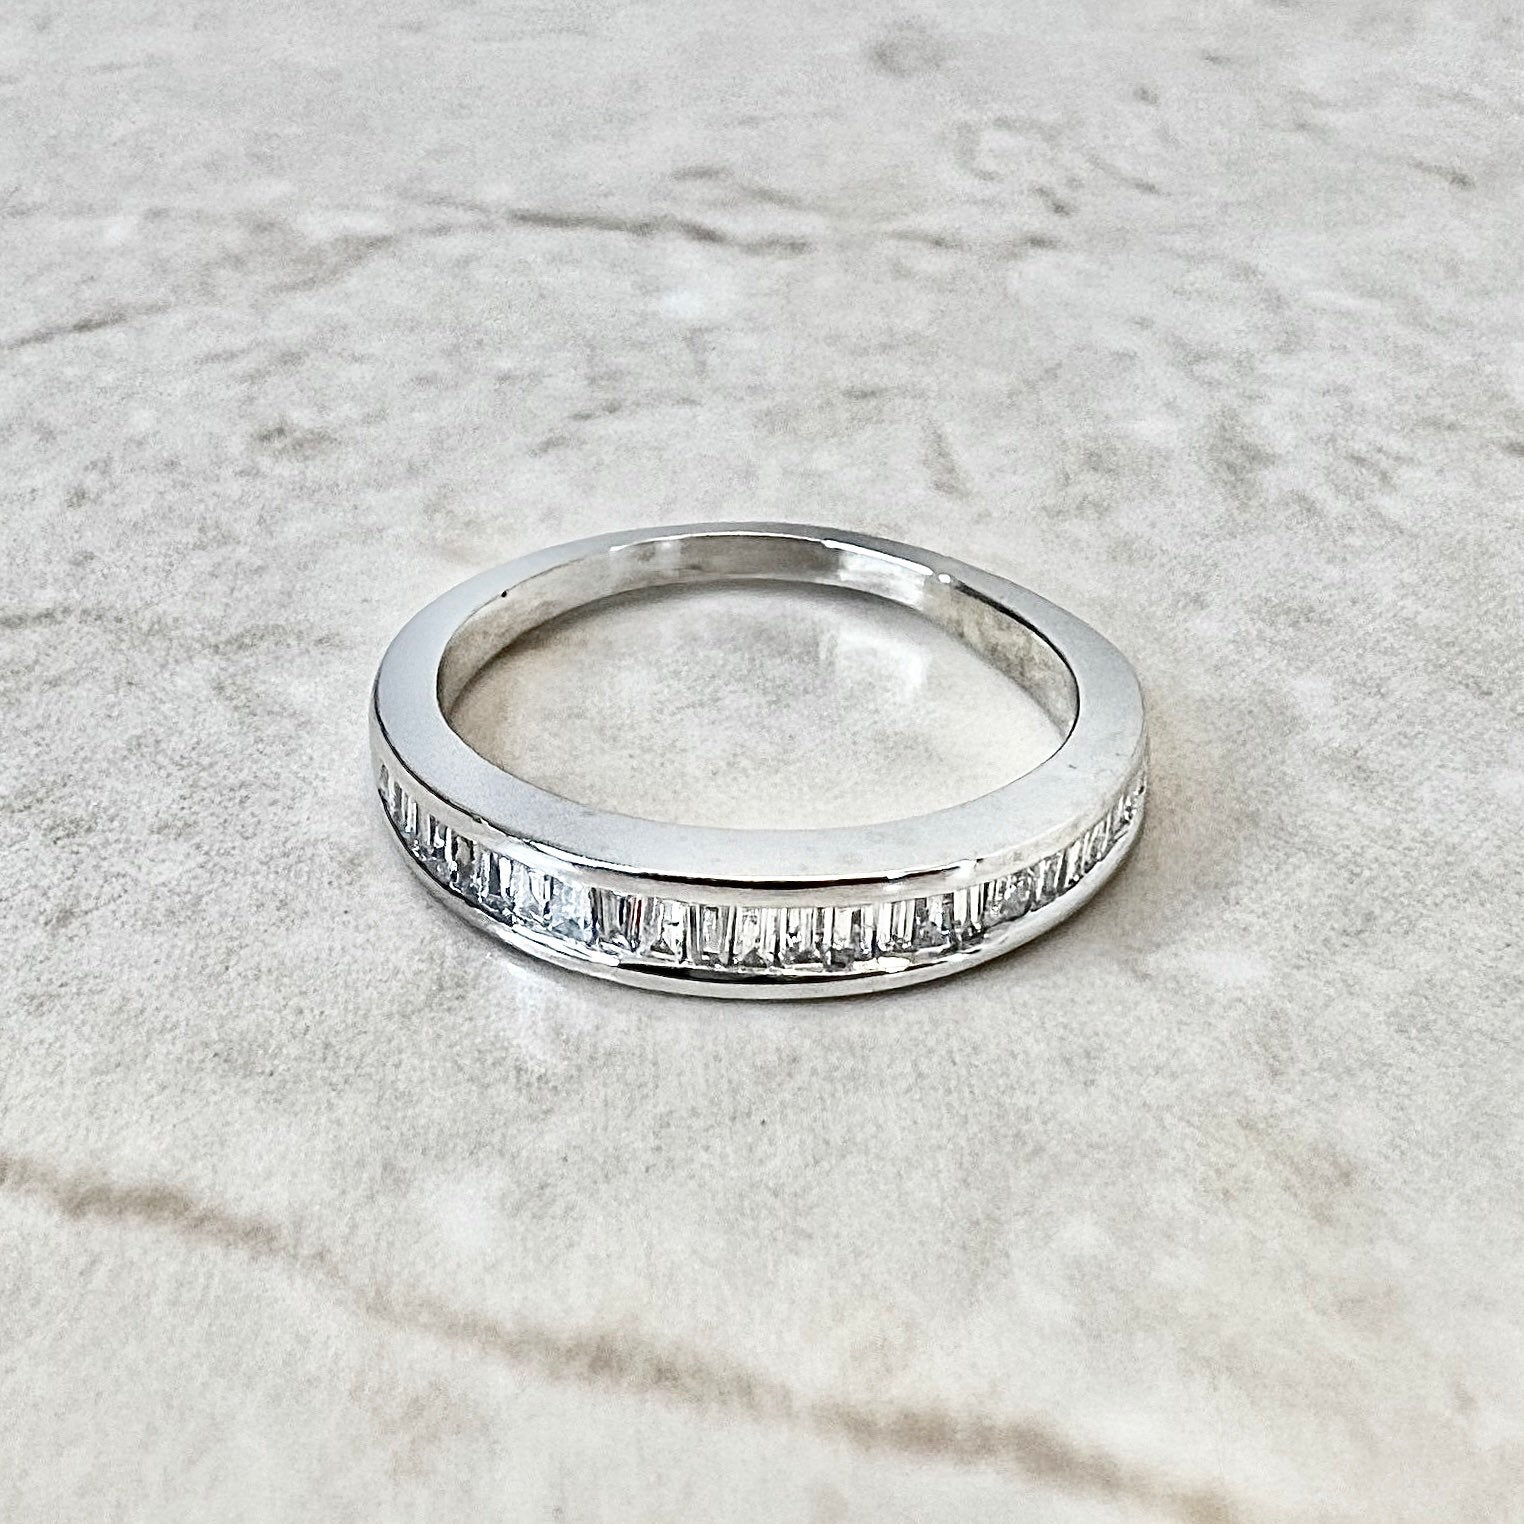 14K Baguette Diamond Band Ring - White Gold Diamond Band - Anniversary Ring - Half Eternity Ring - Diamond Wedding Ring - Gold Diamond Ring